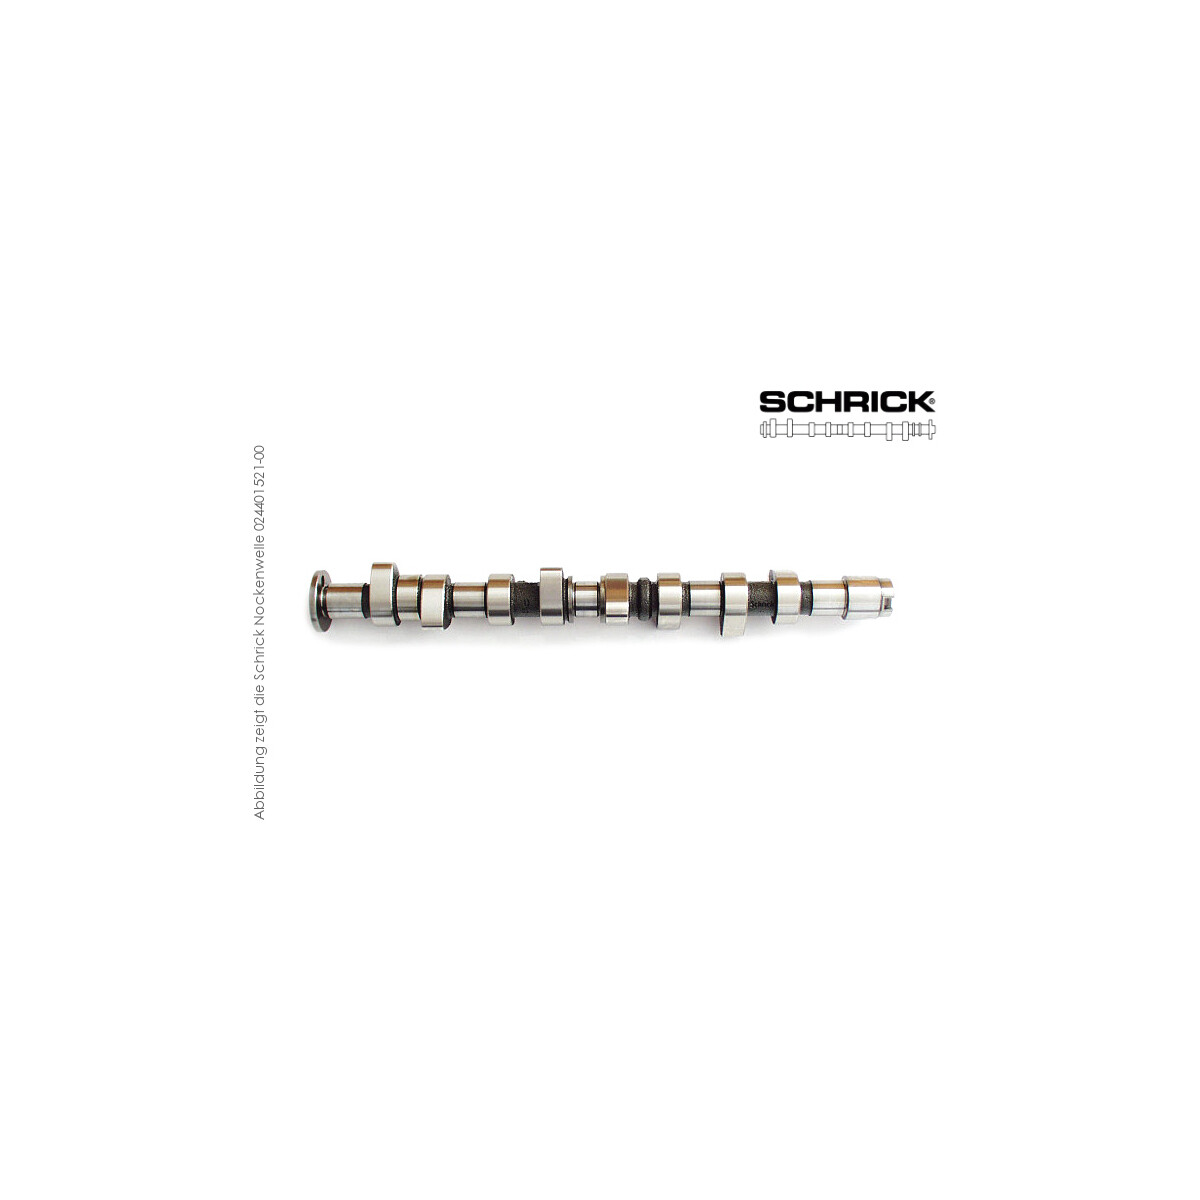 Schrick Nockenwelle für Peugeot 306 | 2,0L 16V 4-Zyl., MKB: XU10J4 | 268° Auslassnockenwelle (Schrick 0336A1681-00)